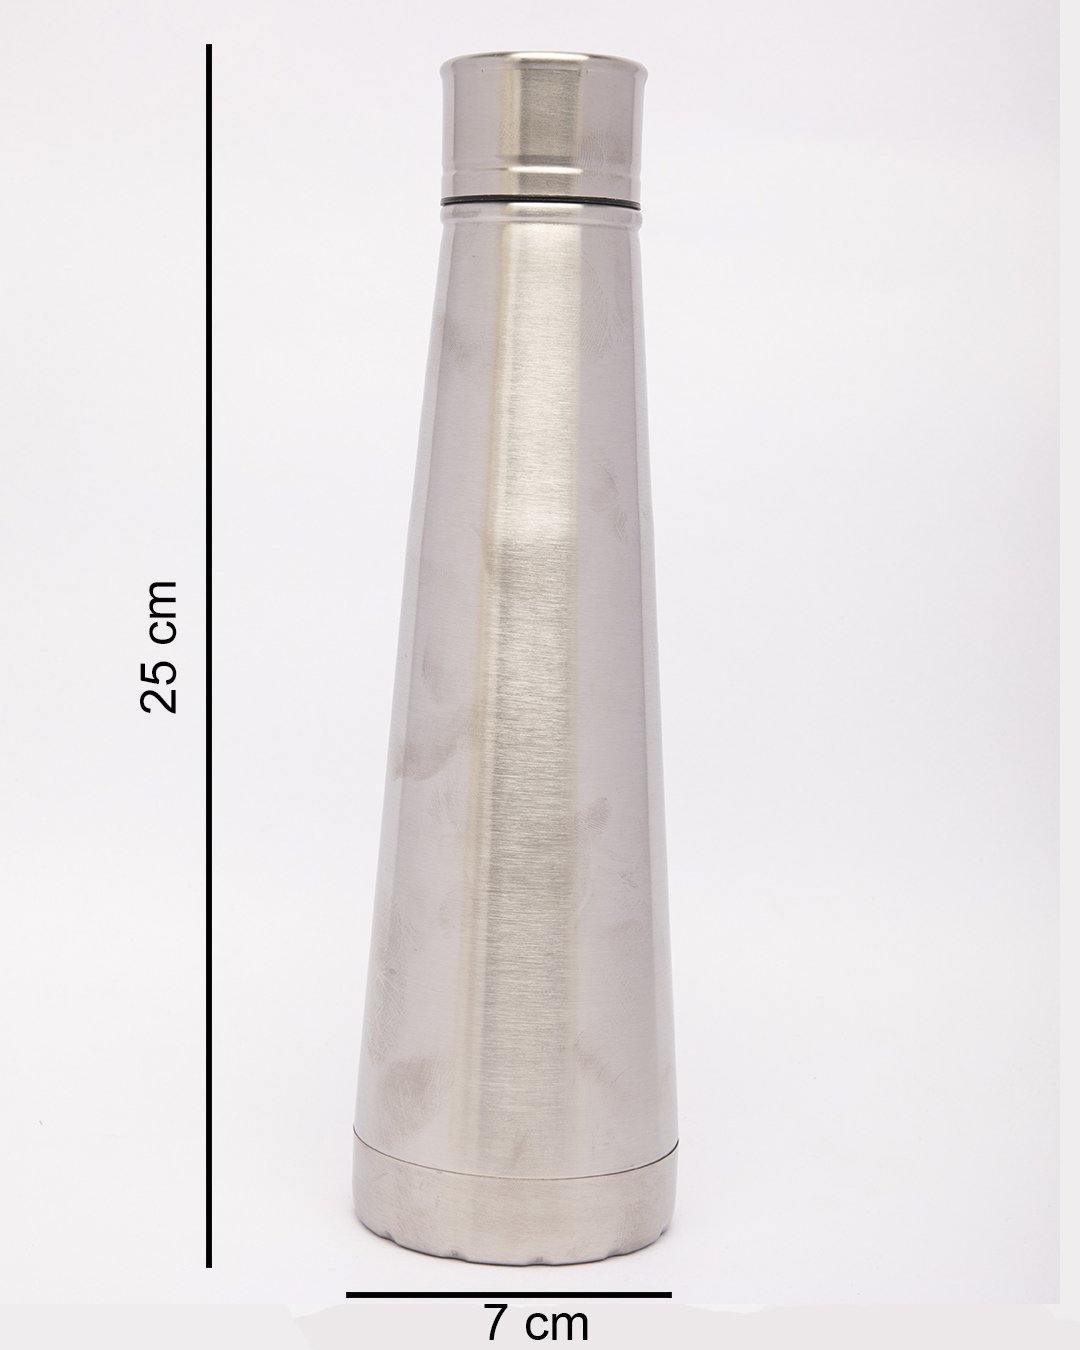 Travel Bottle, Silver, Stainless Steel, 620 mL - MARKET 99